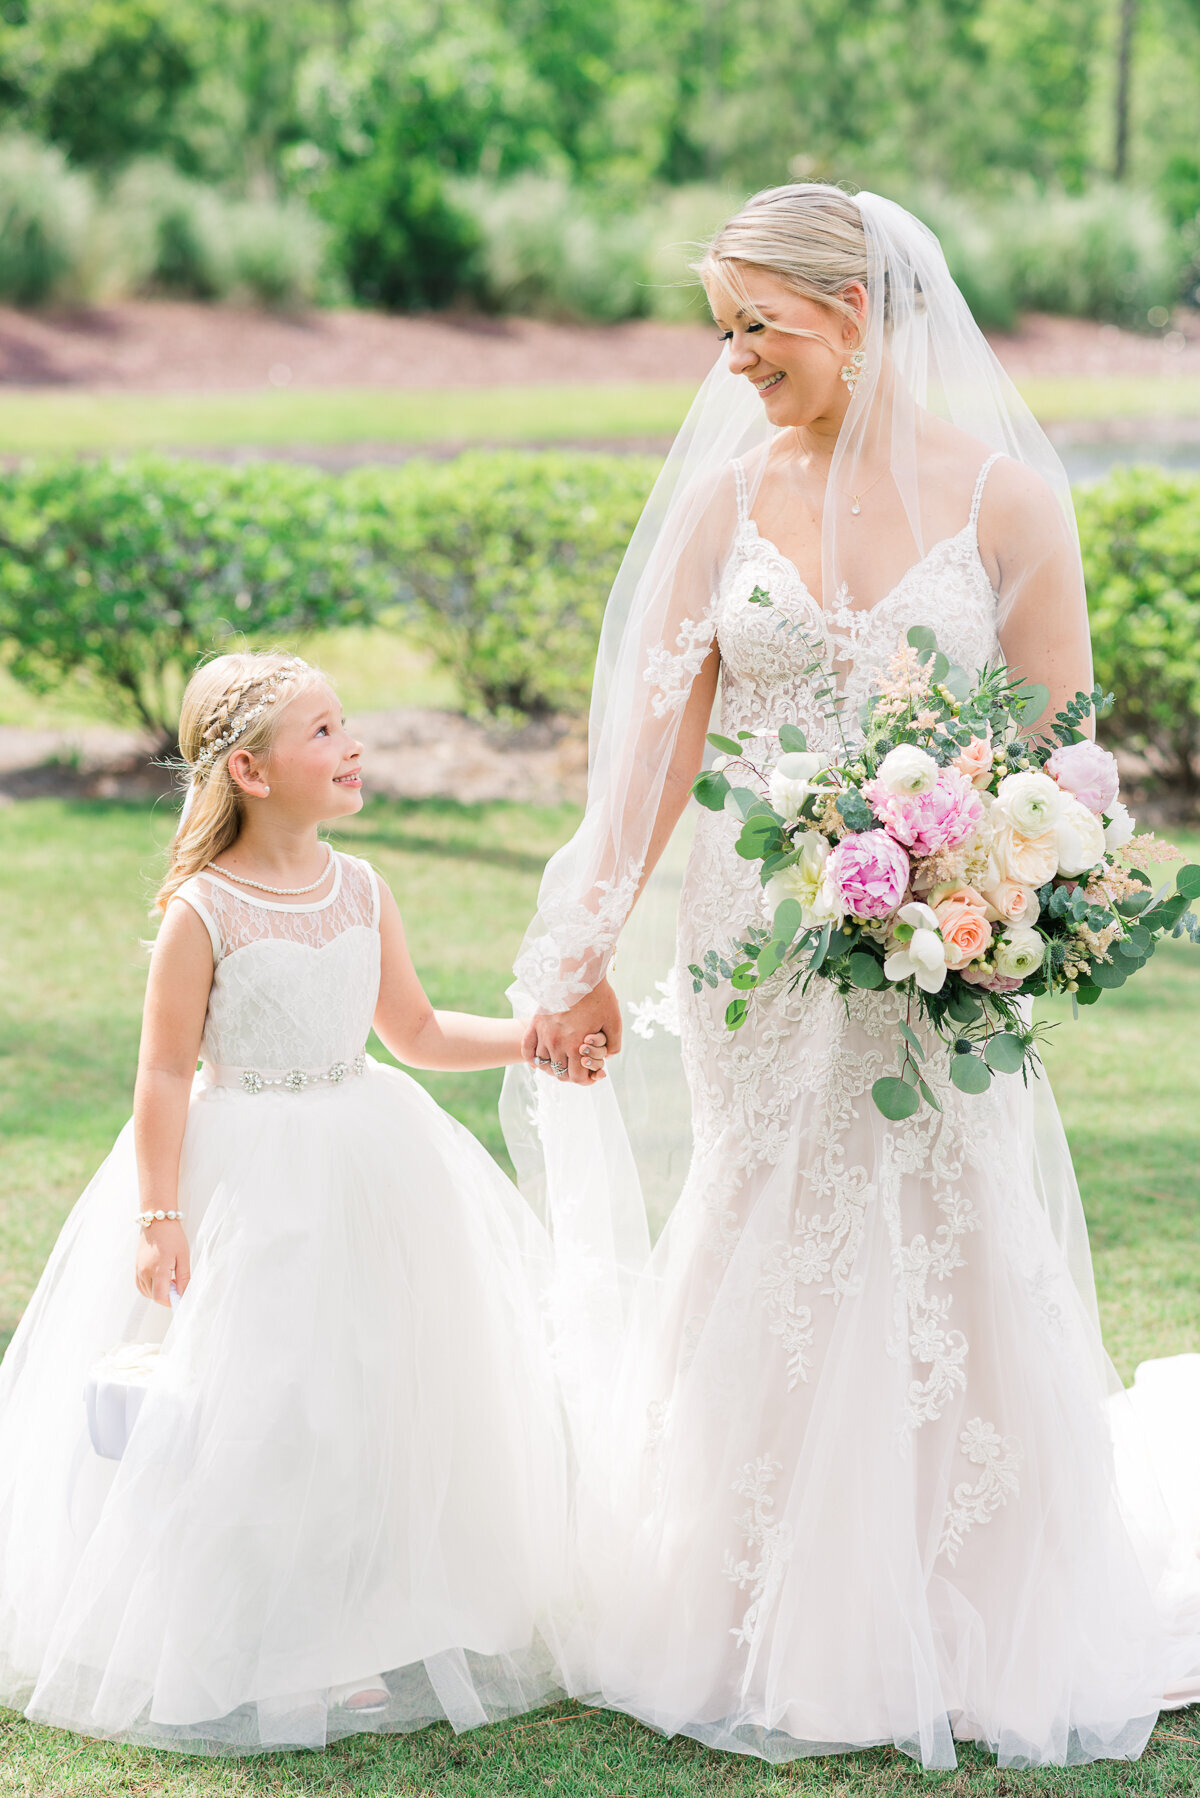 Dereka & Jordan Granville Farms Wedding Bride and Flowergirl | Lisa Marshall Photography